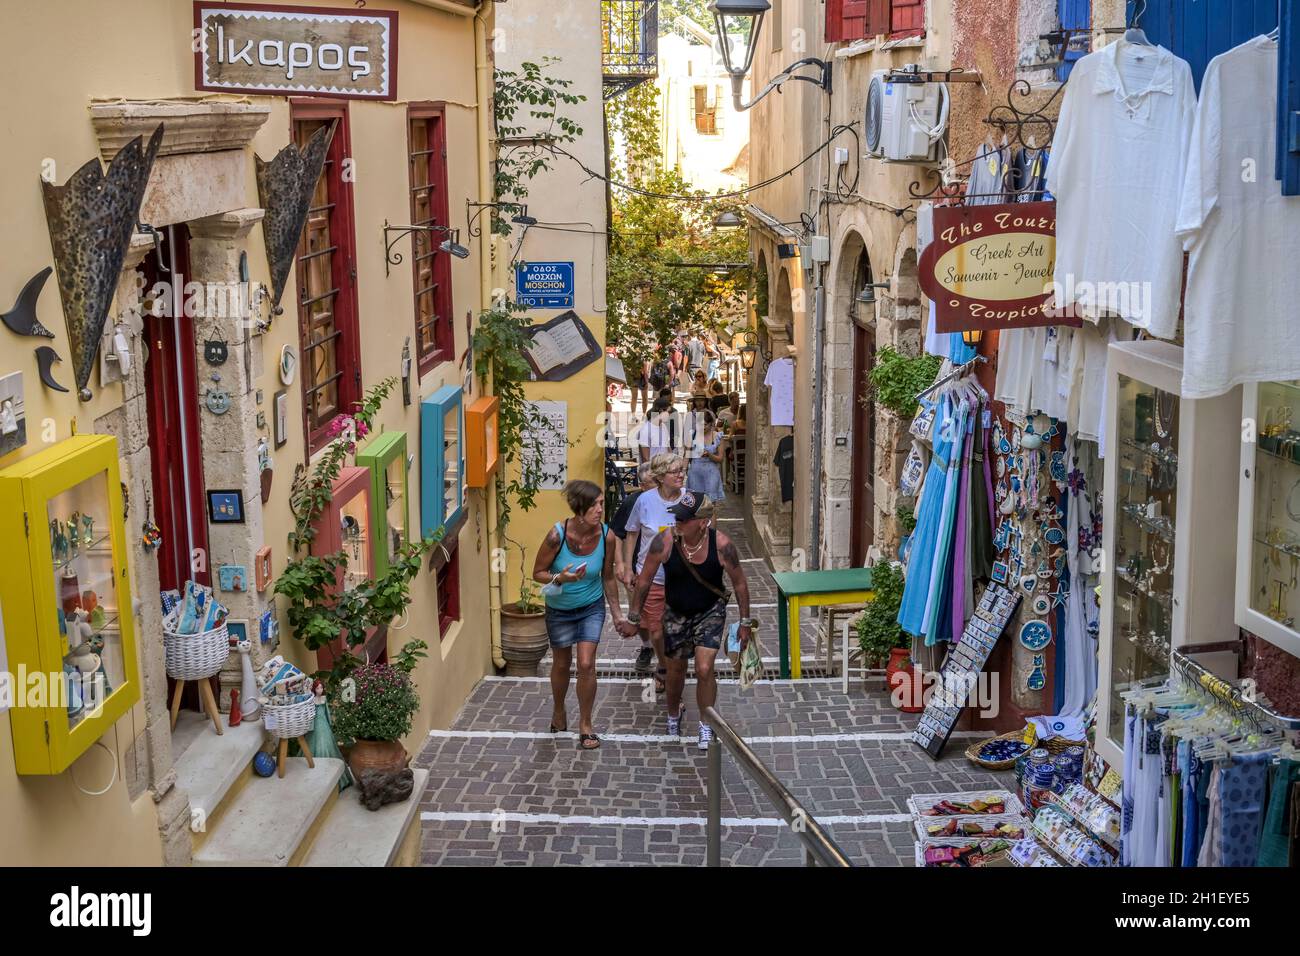 Souvenirgeschäft, Altstadtgasse, Topanas-Viertel, Chania, Kreta, Griechenland Stock Photo